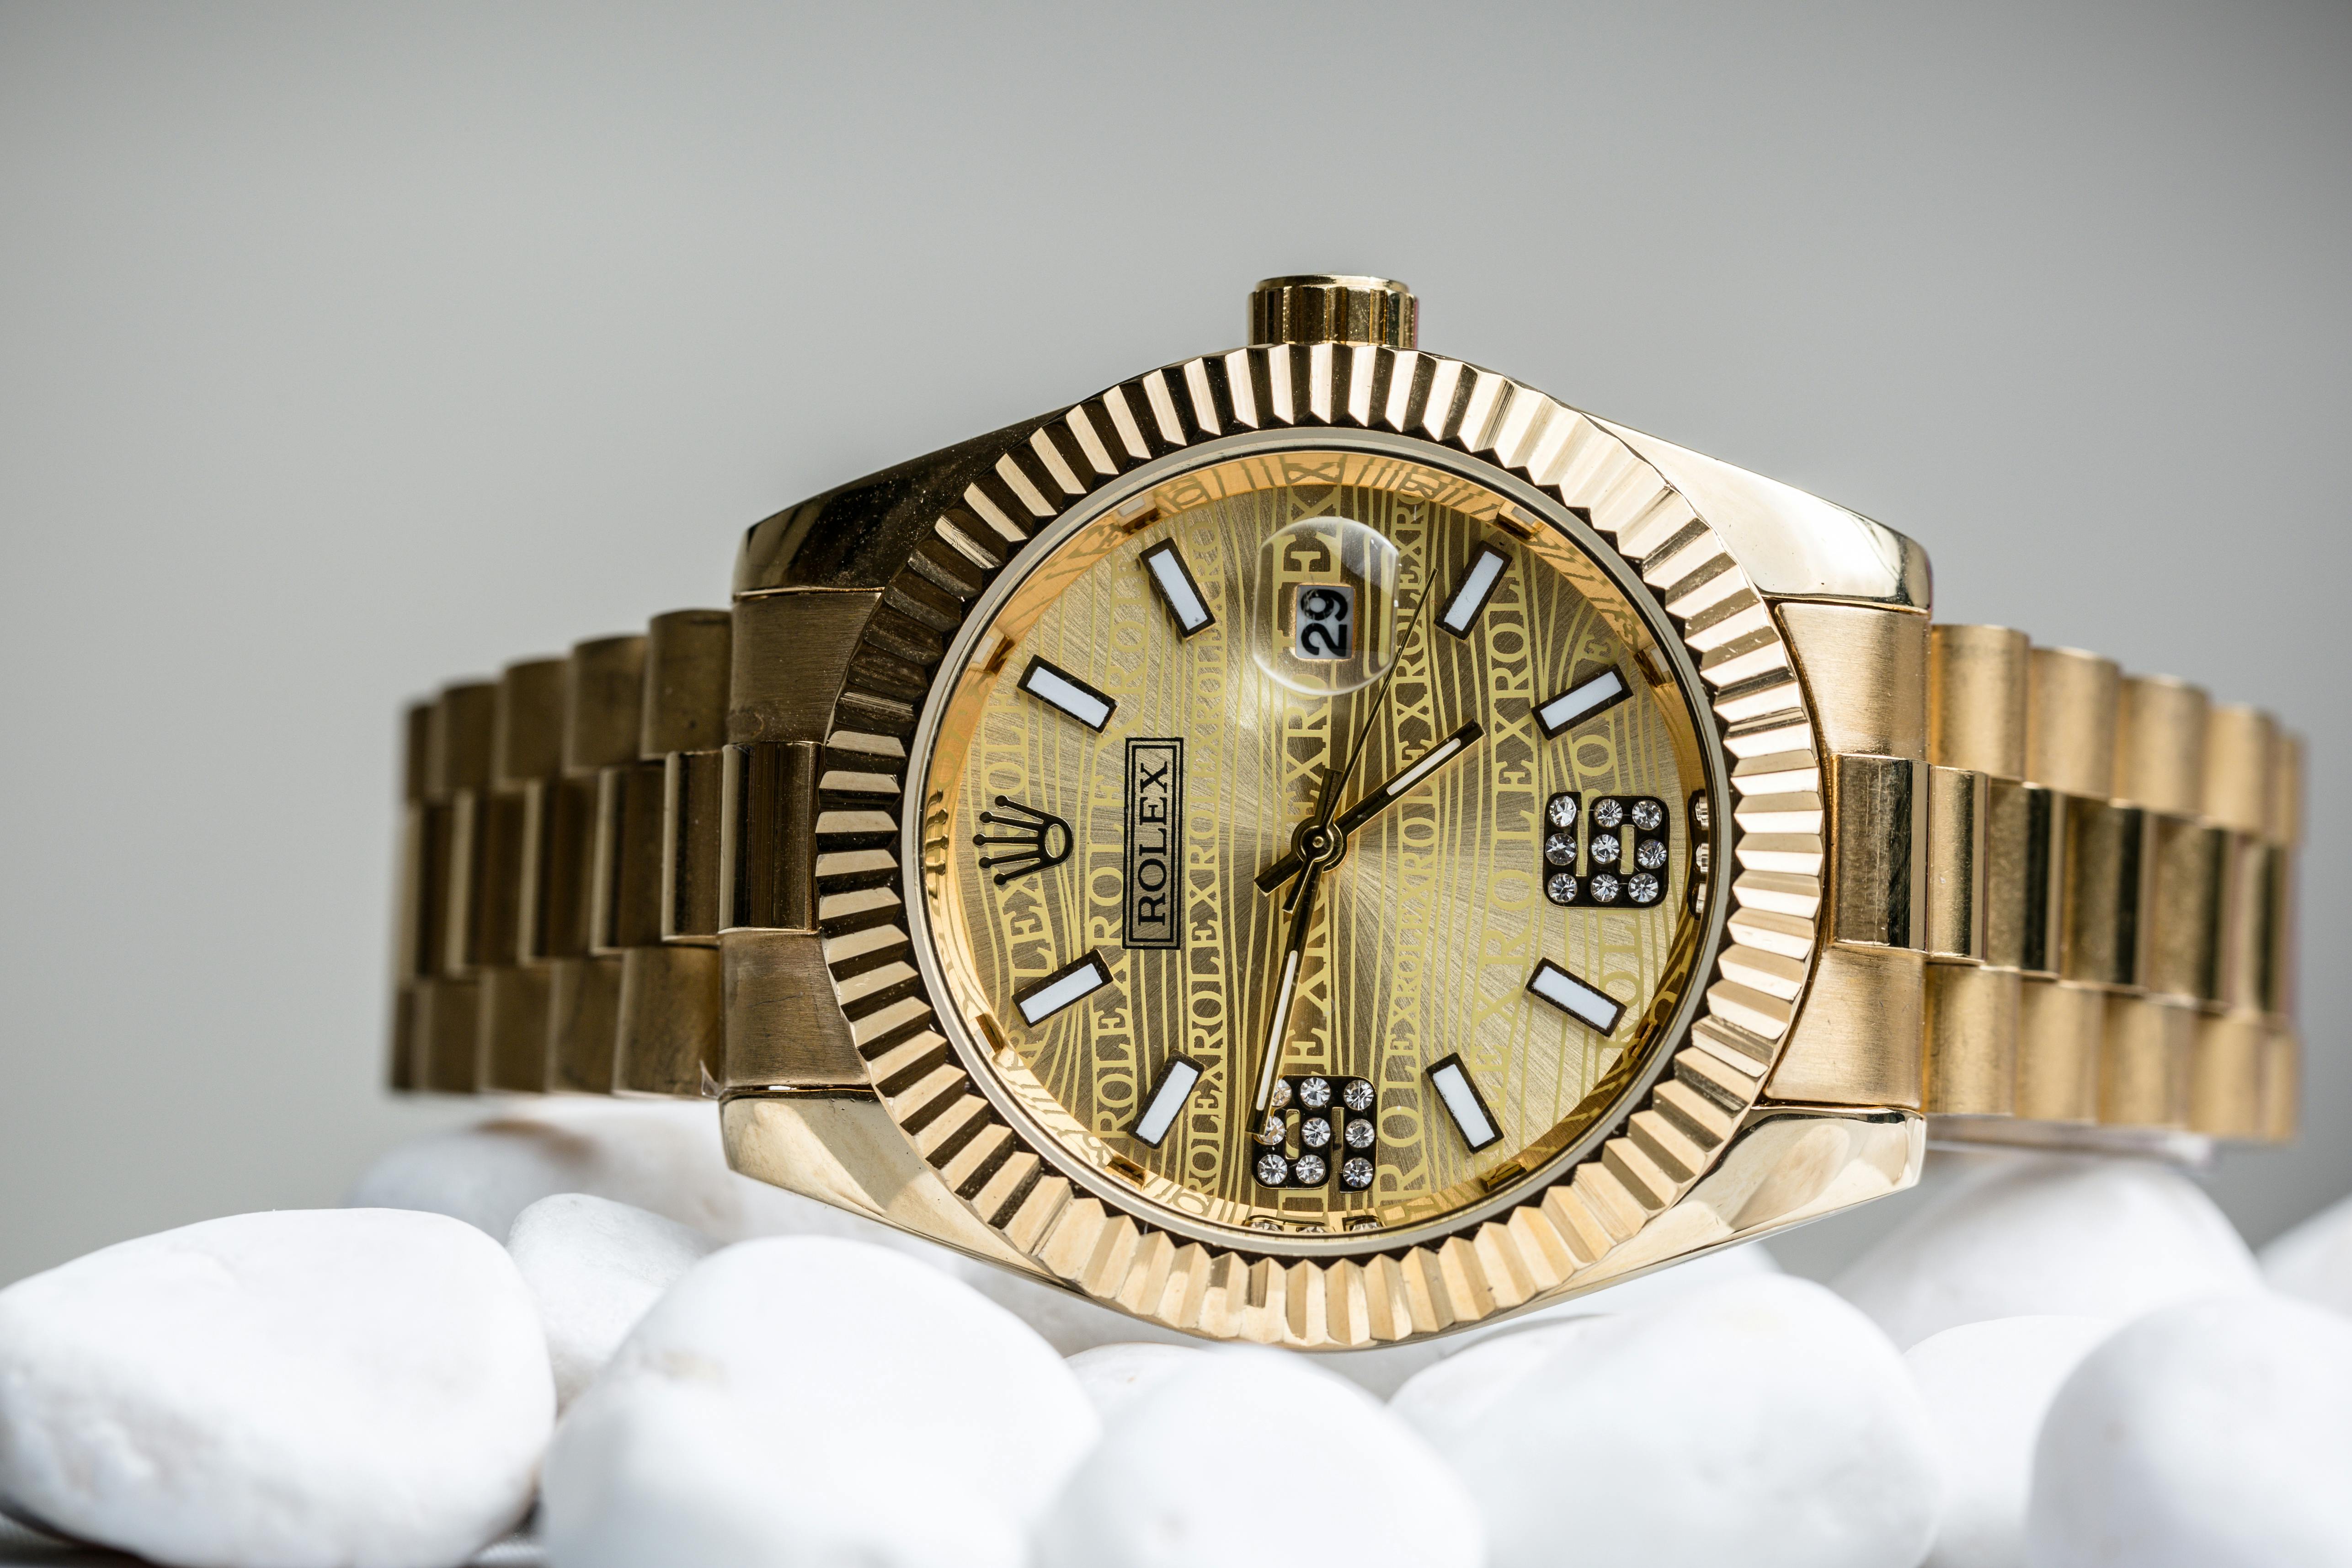 Gøre klart hav det sjovt Blaze A Gold Rolex Watch with Diamonds · Free Stock Photo